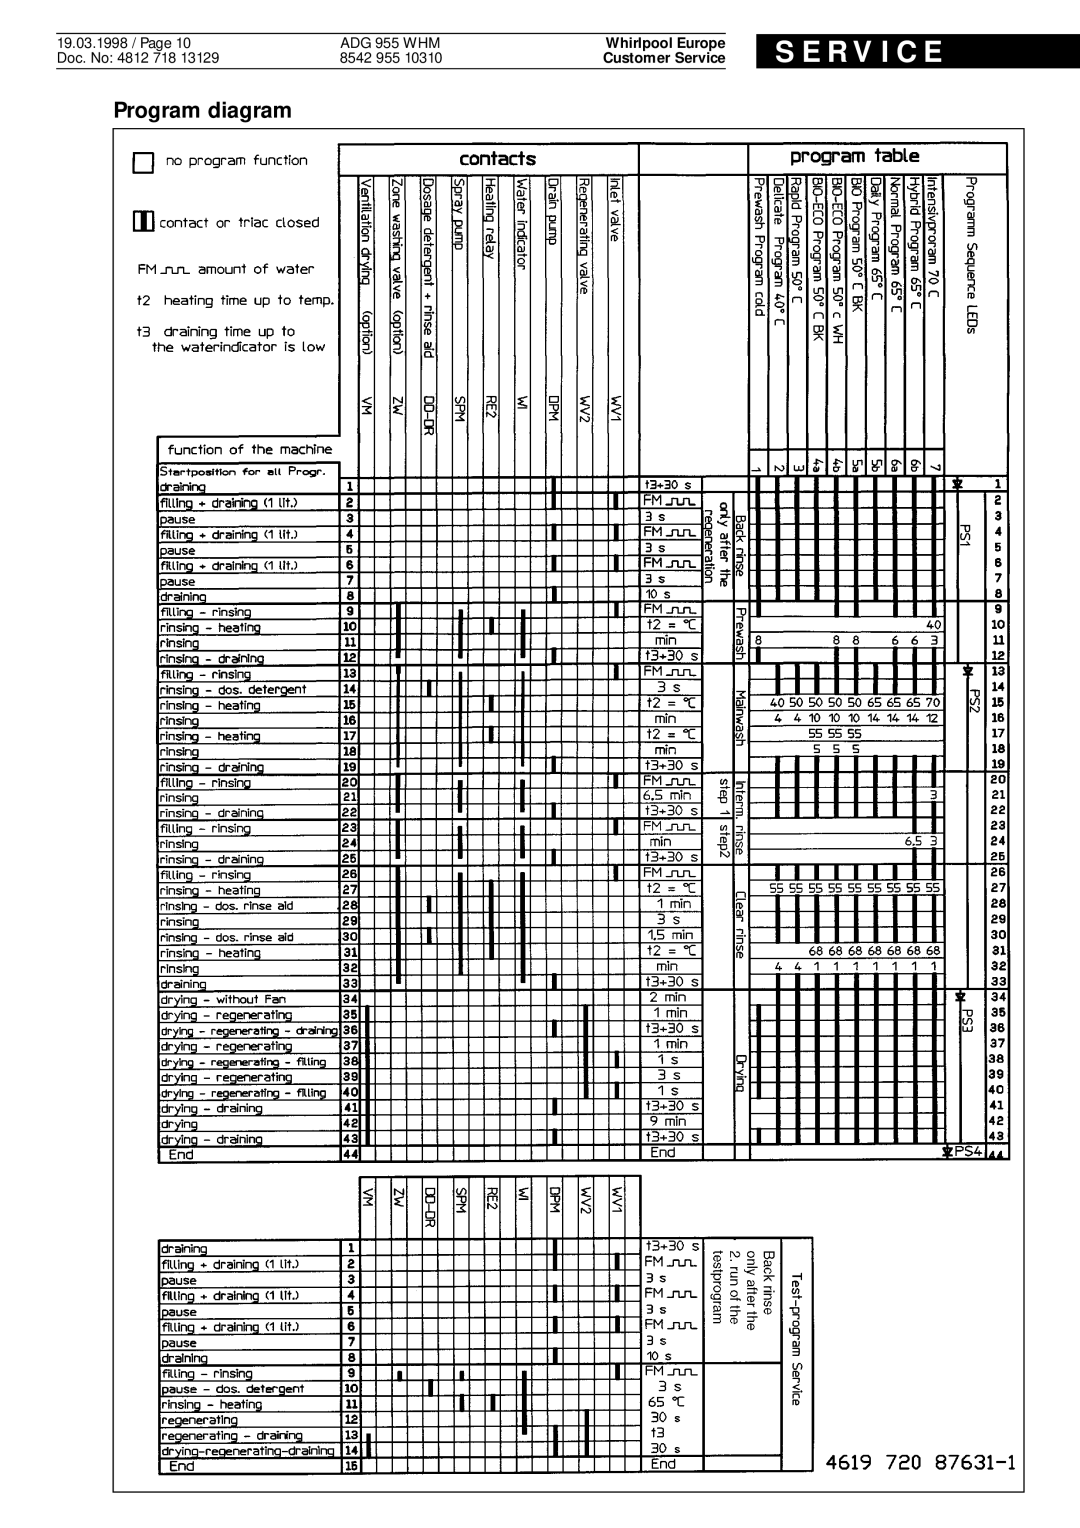 Whirlpool ADG 955 WHM service manual Program diagram, S E R V I C E, Whirlpool Europe, Customer Service 